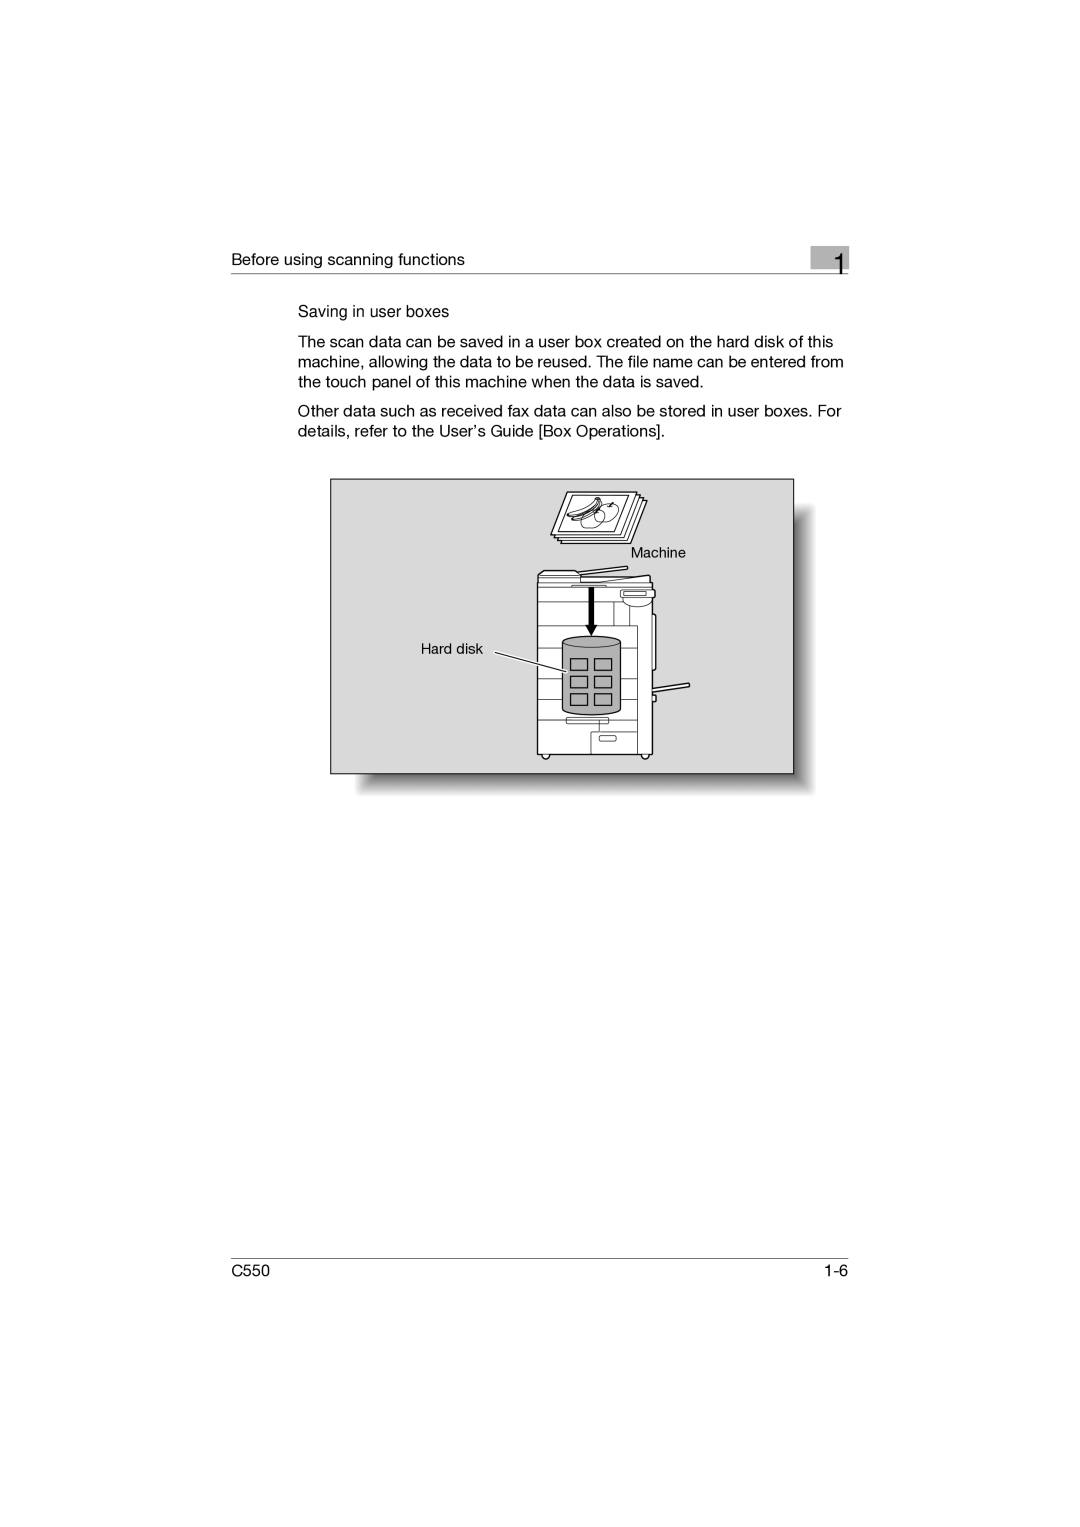 Konica Minolta C550 manual Saving in user boxes 